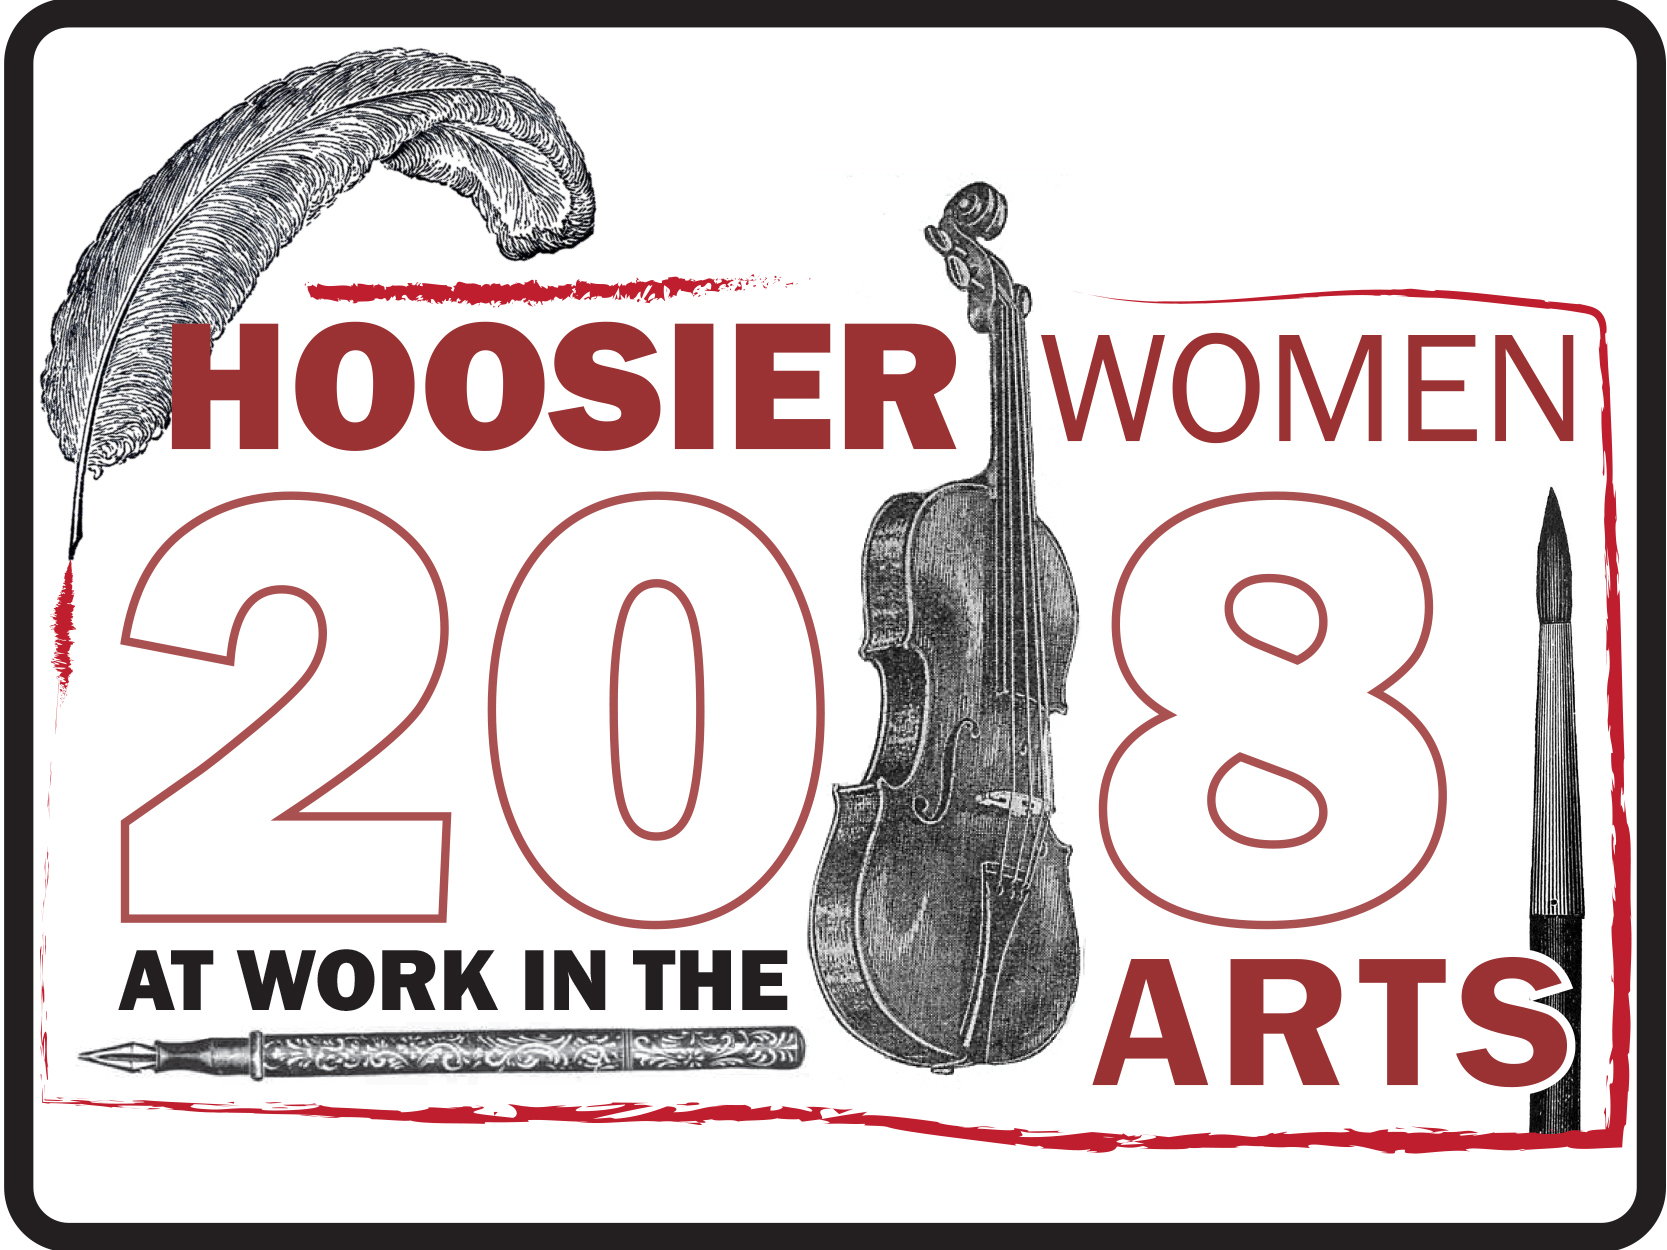 Hoosier Women 2018 at work in the Arts